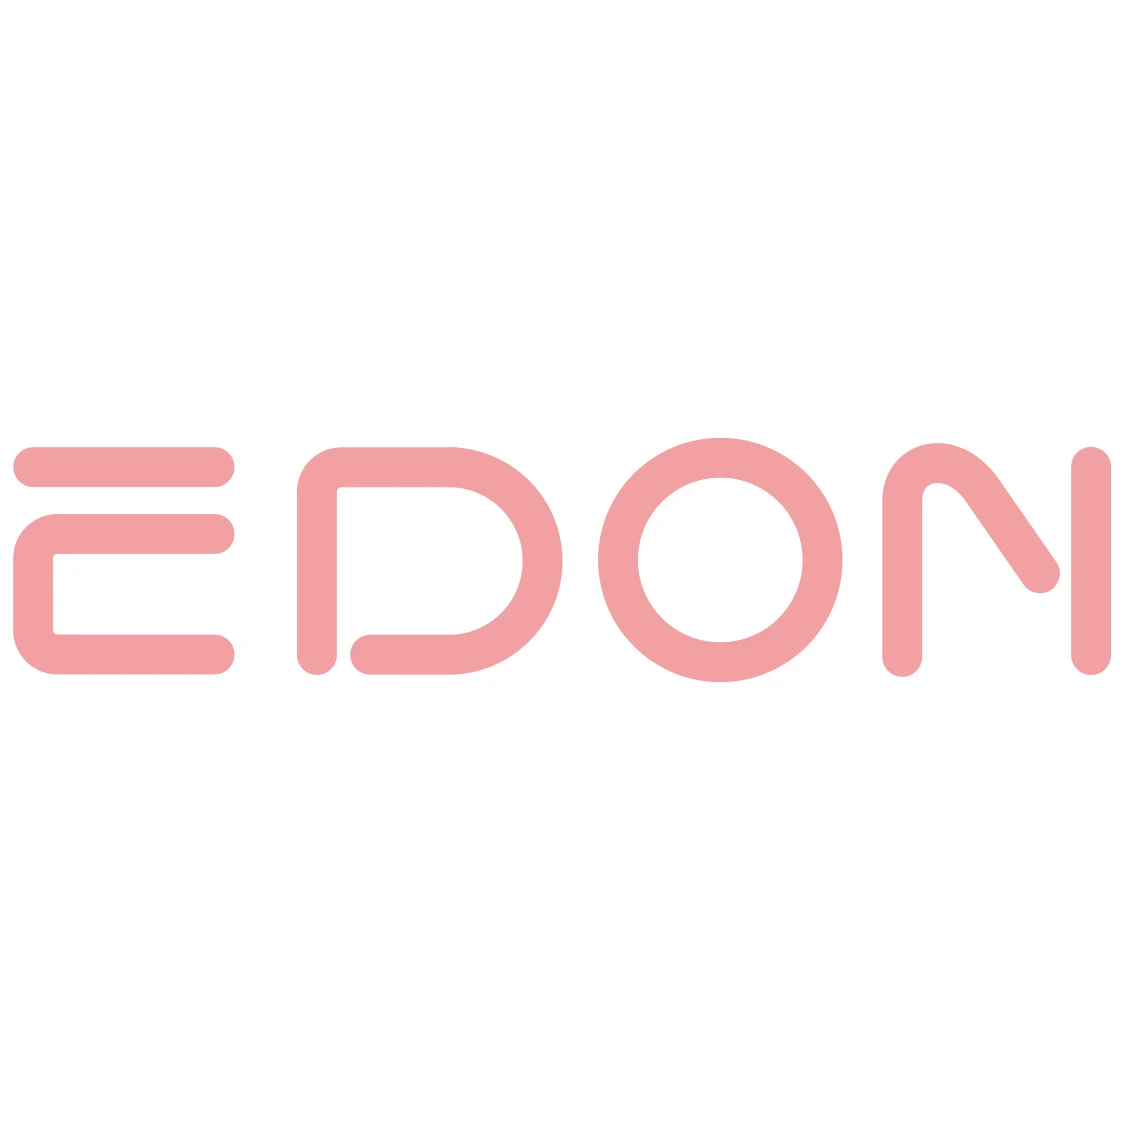 Edon logo. Edon логотип. Ready sale